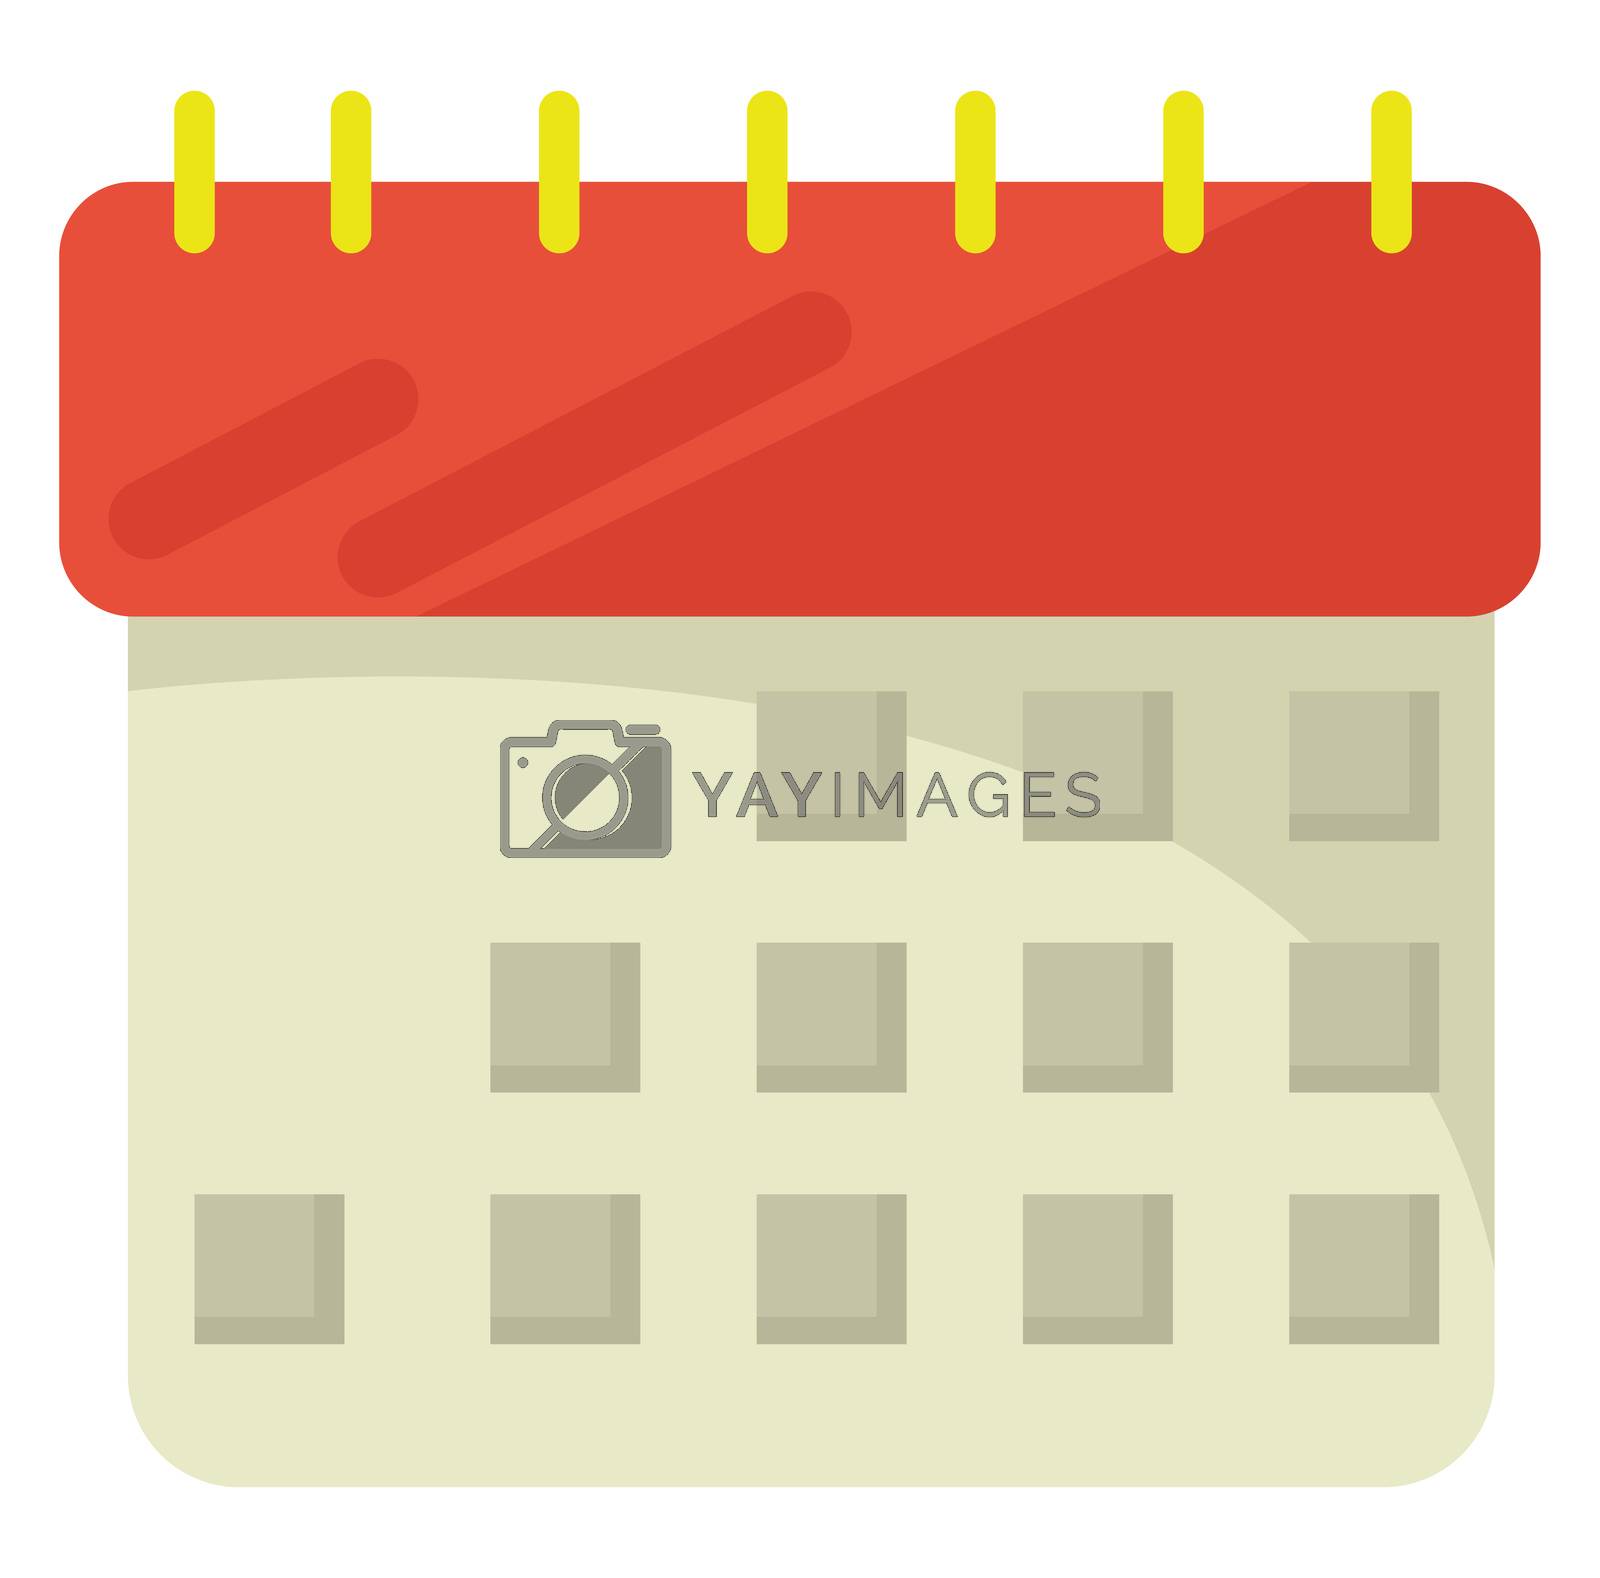 Royalty free image of Calendar , illustration, vector on white background by Morphart